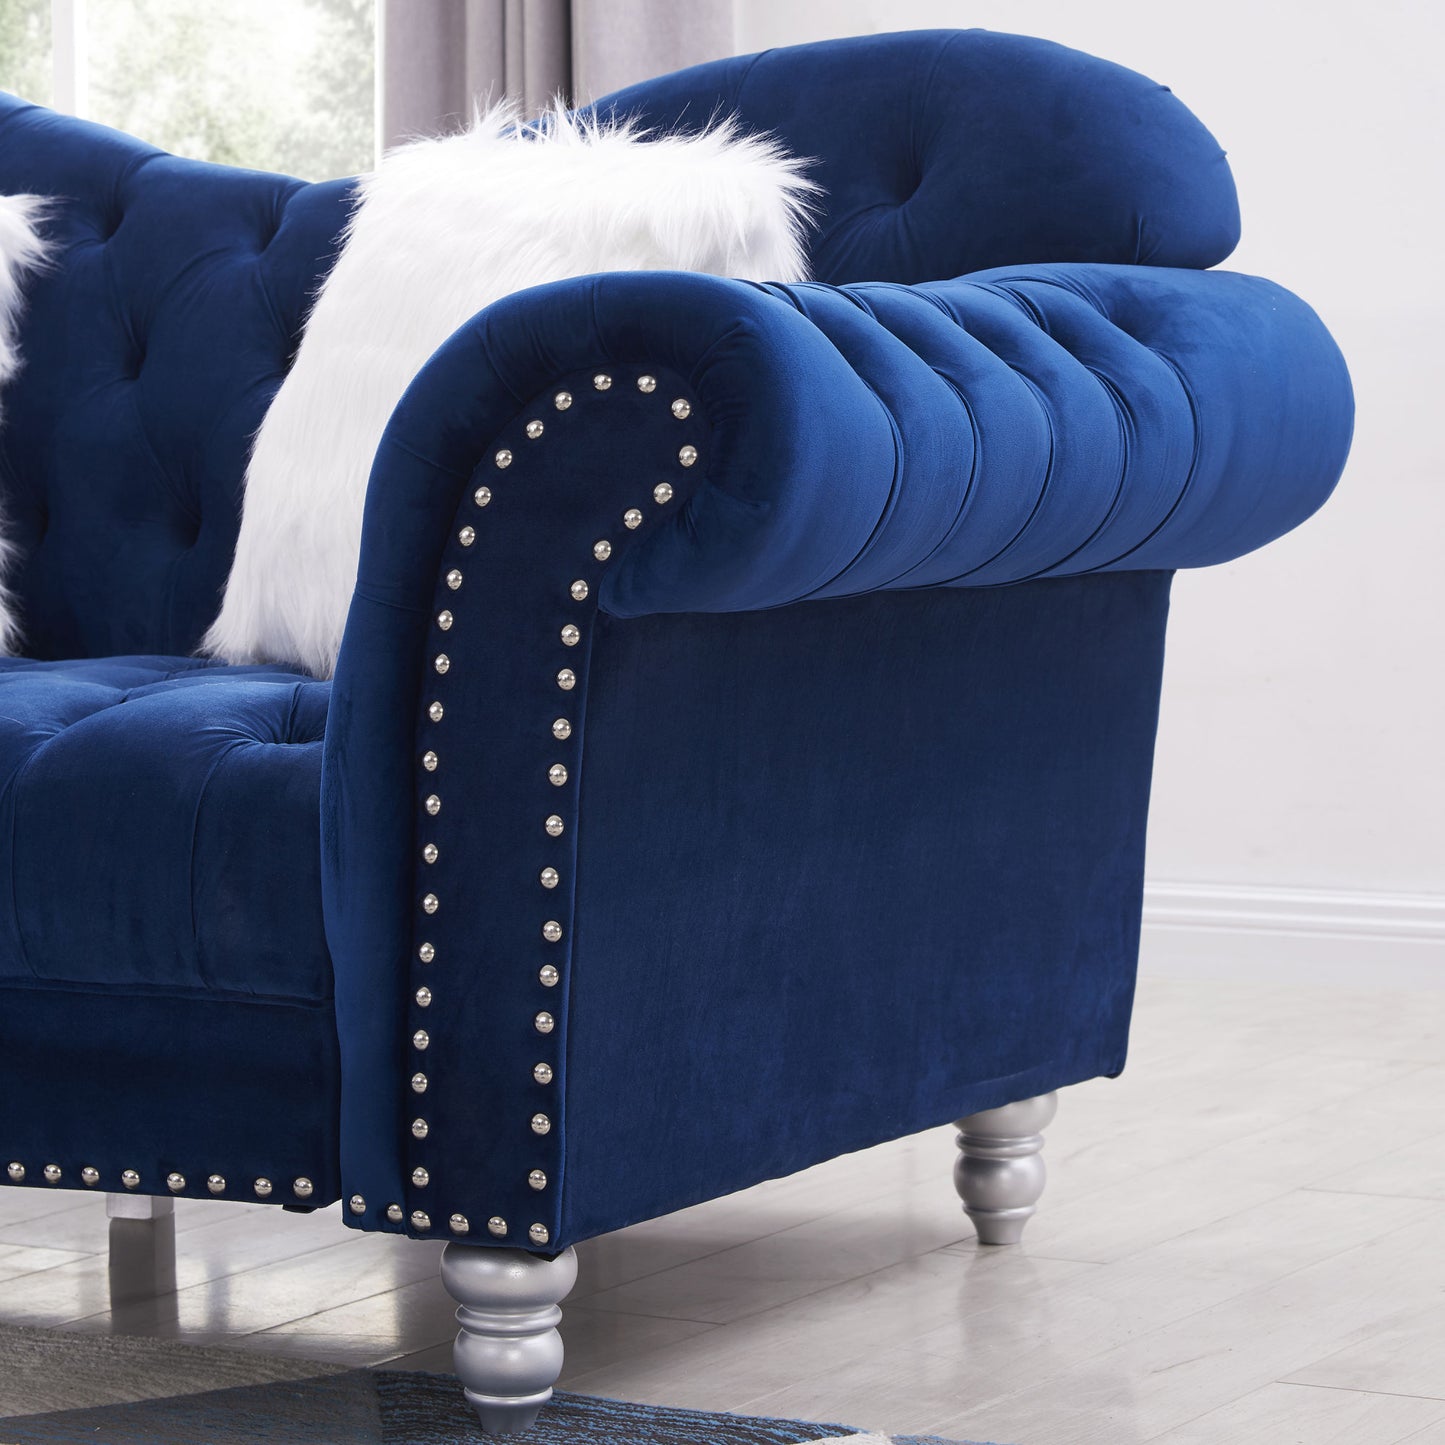 3 piece sofa set with five white villose pillow, blue